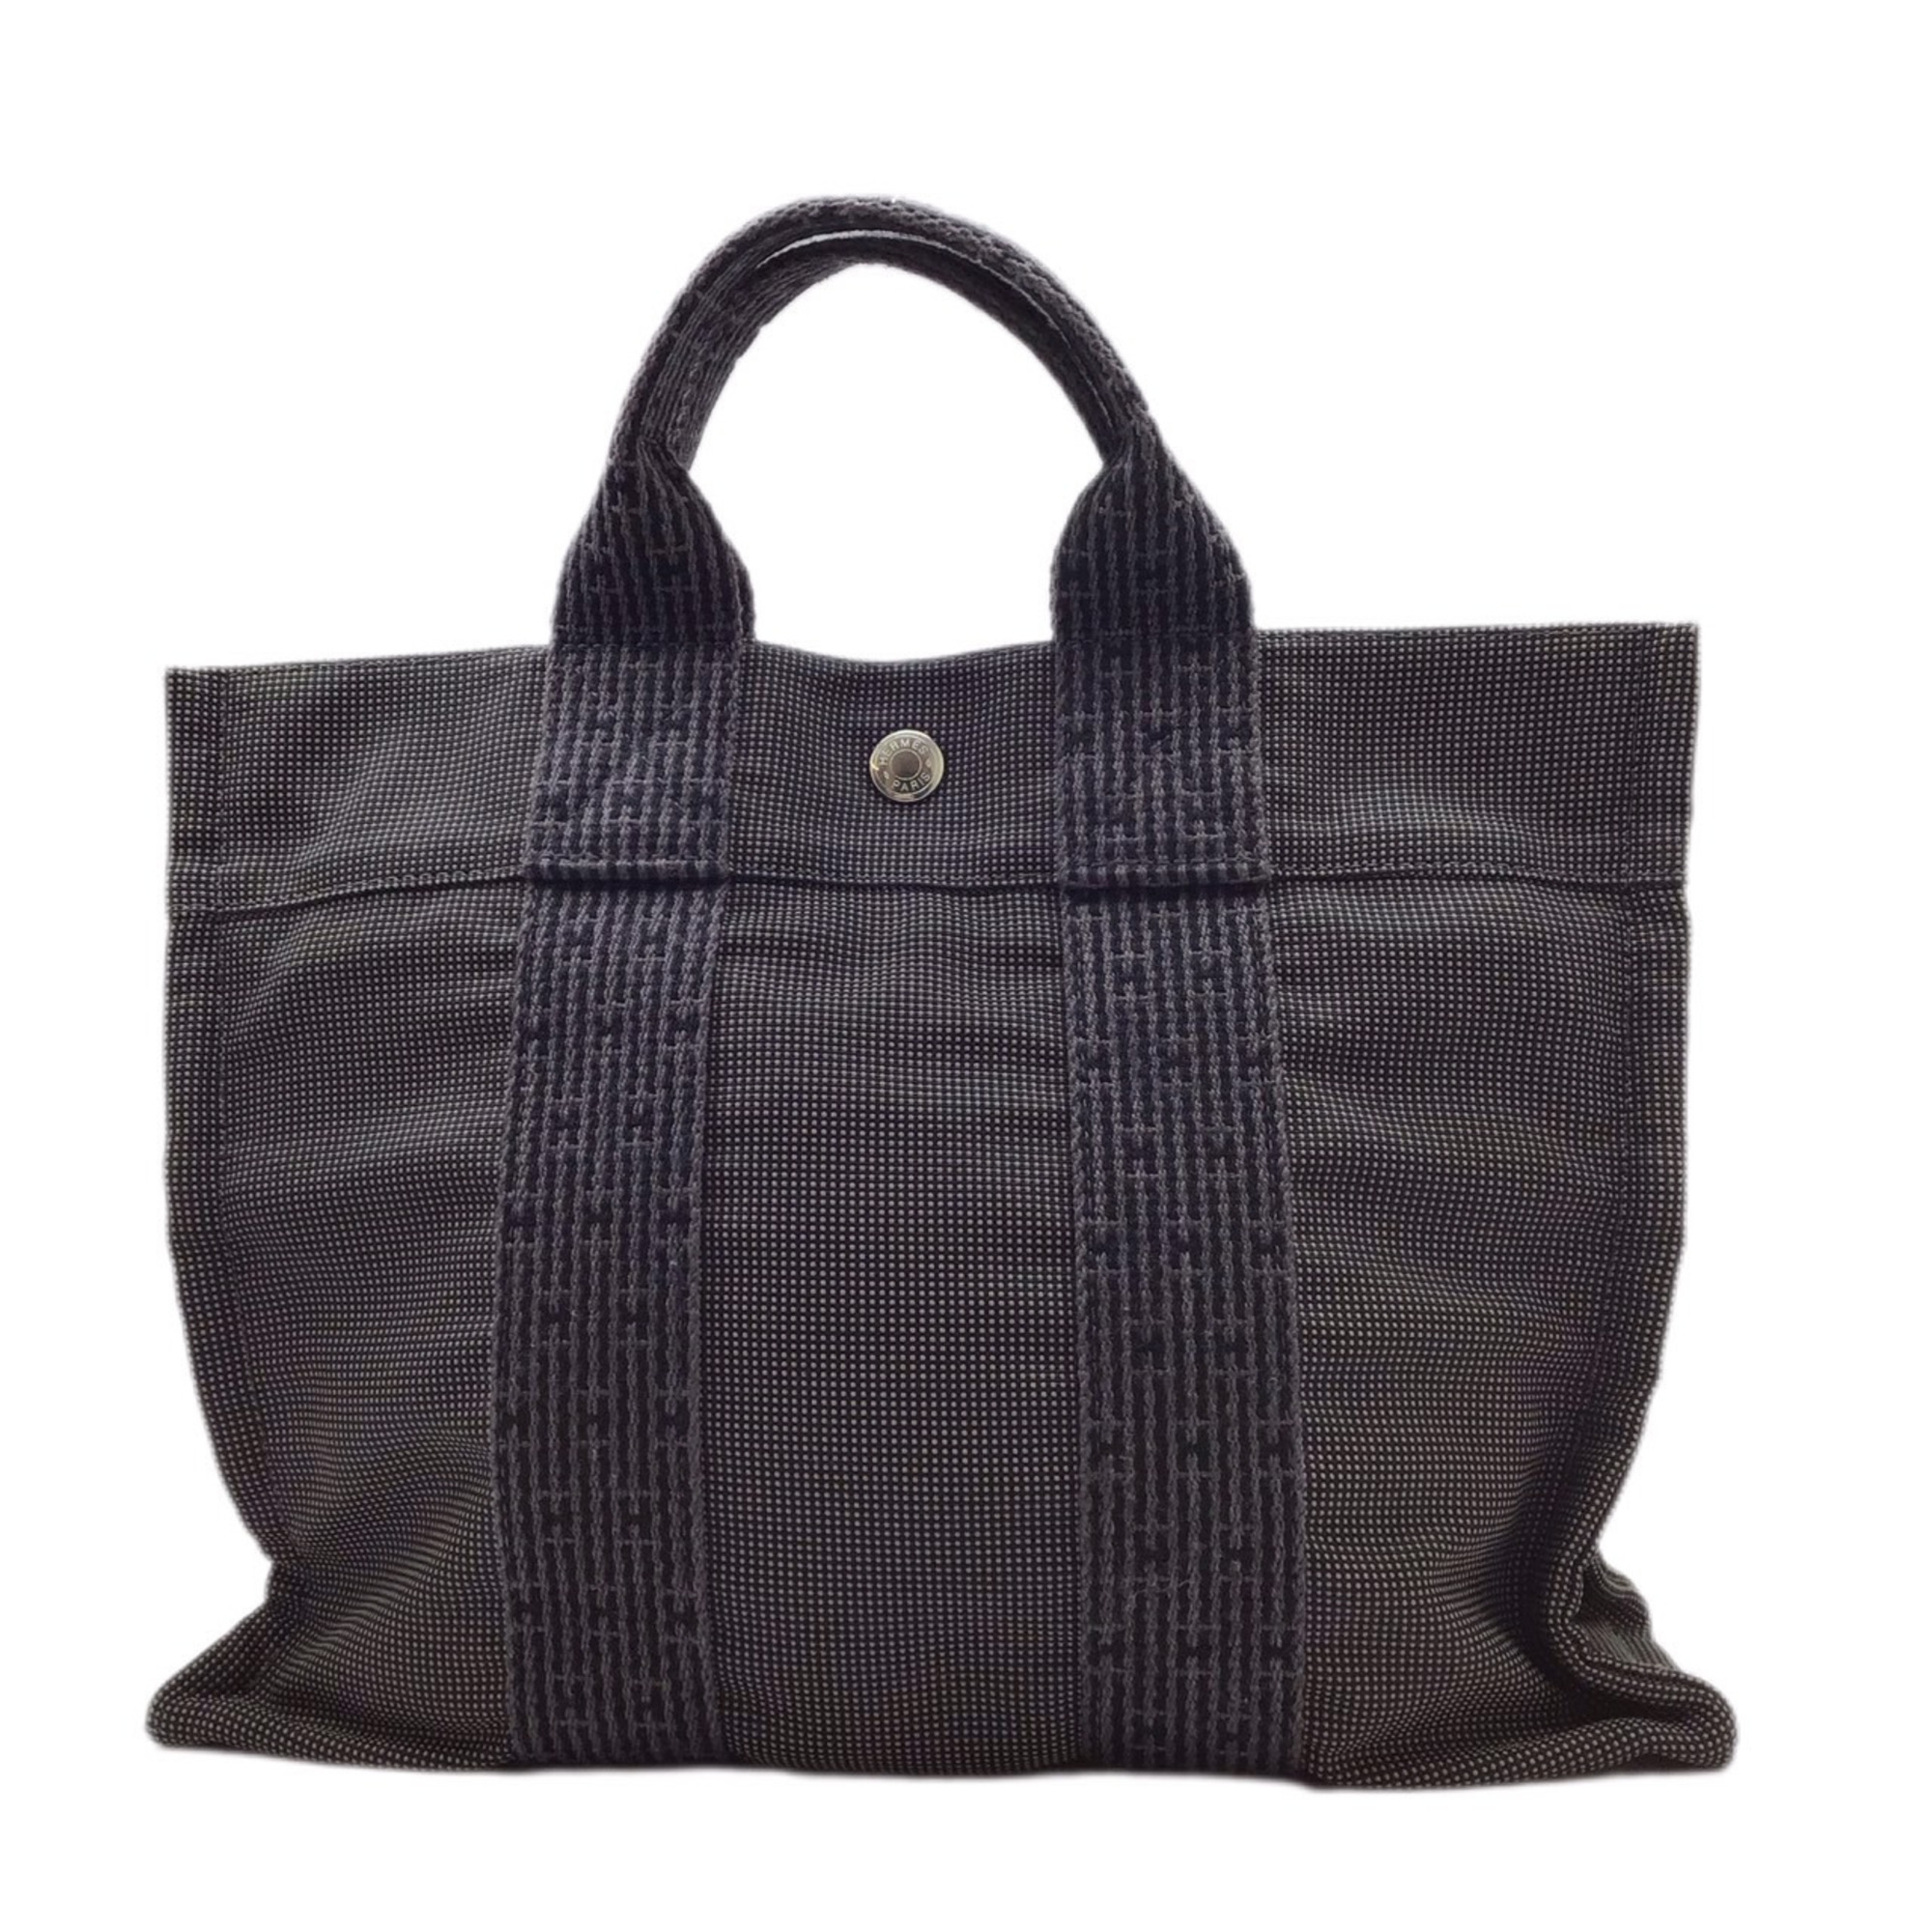 HERMES Hermes Aerline Tote PM Gray Handbag Nylon Canvas Bag Compact Ladies Men's Unisex